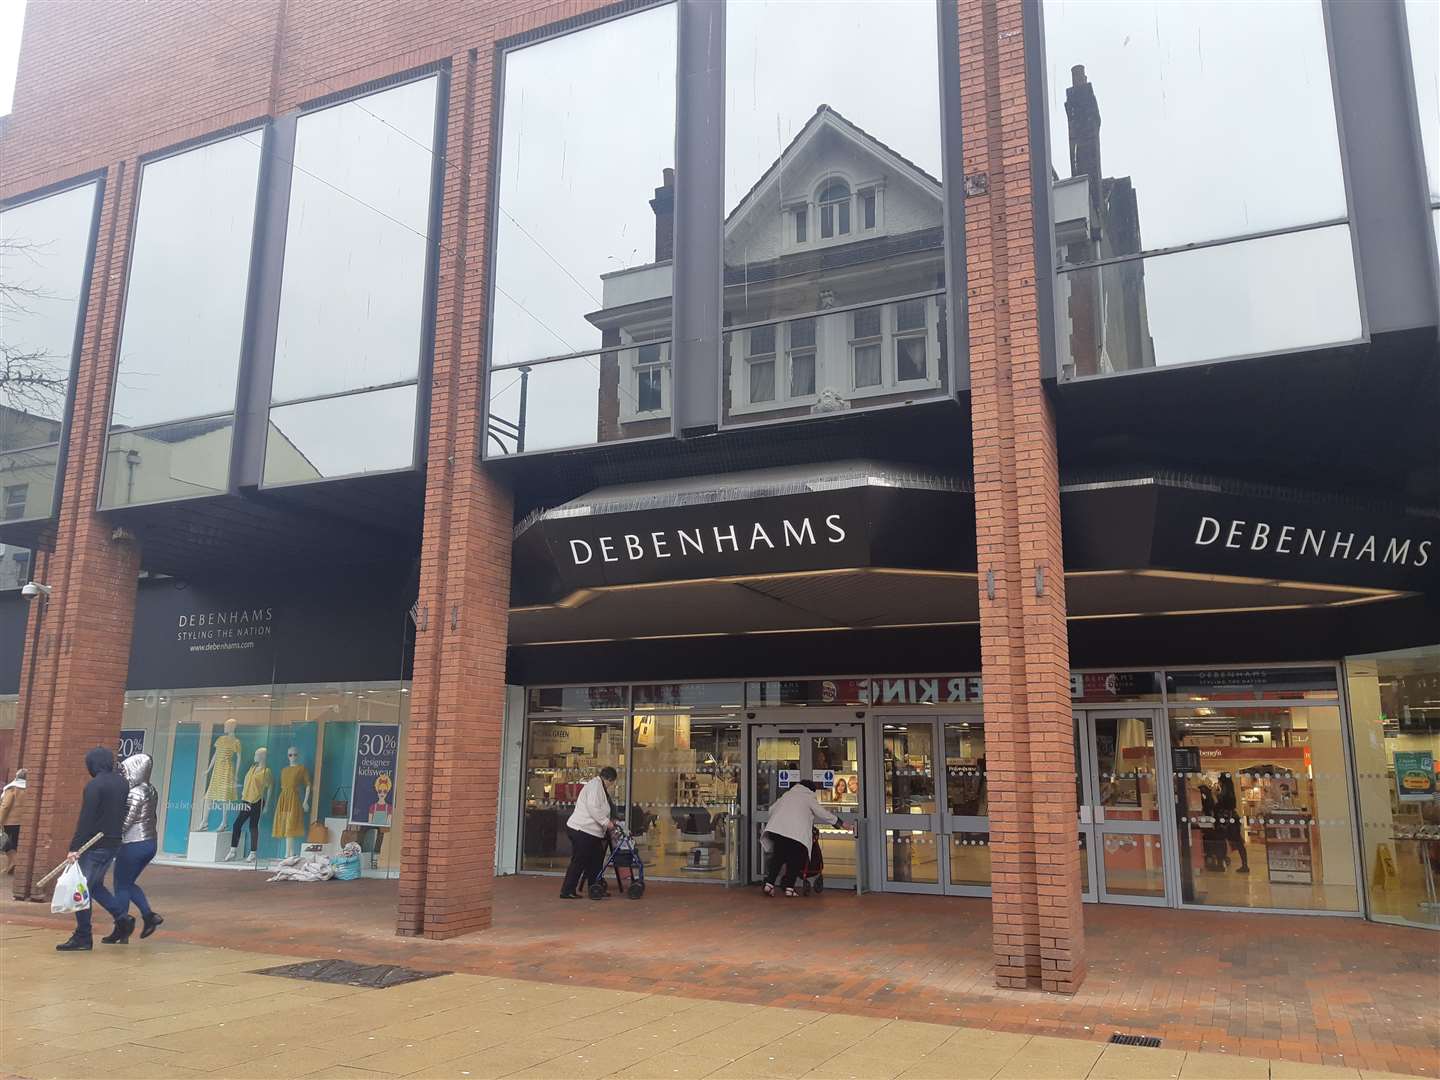 Debenhams in High Street, Chatham will close on January 15